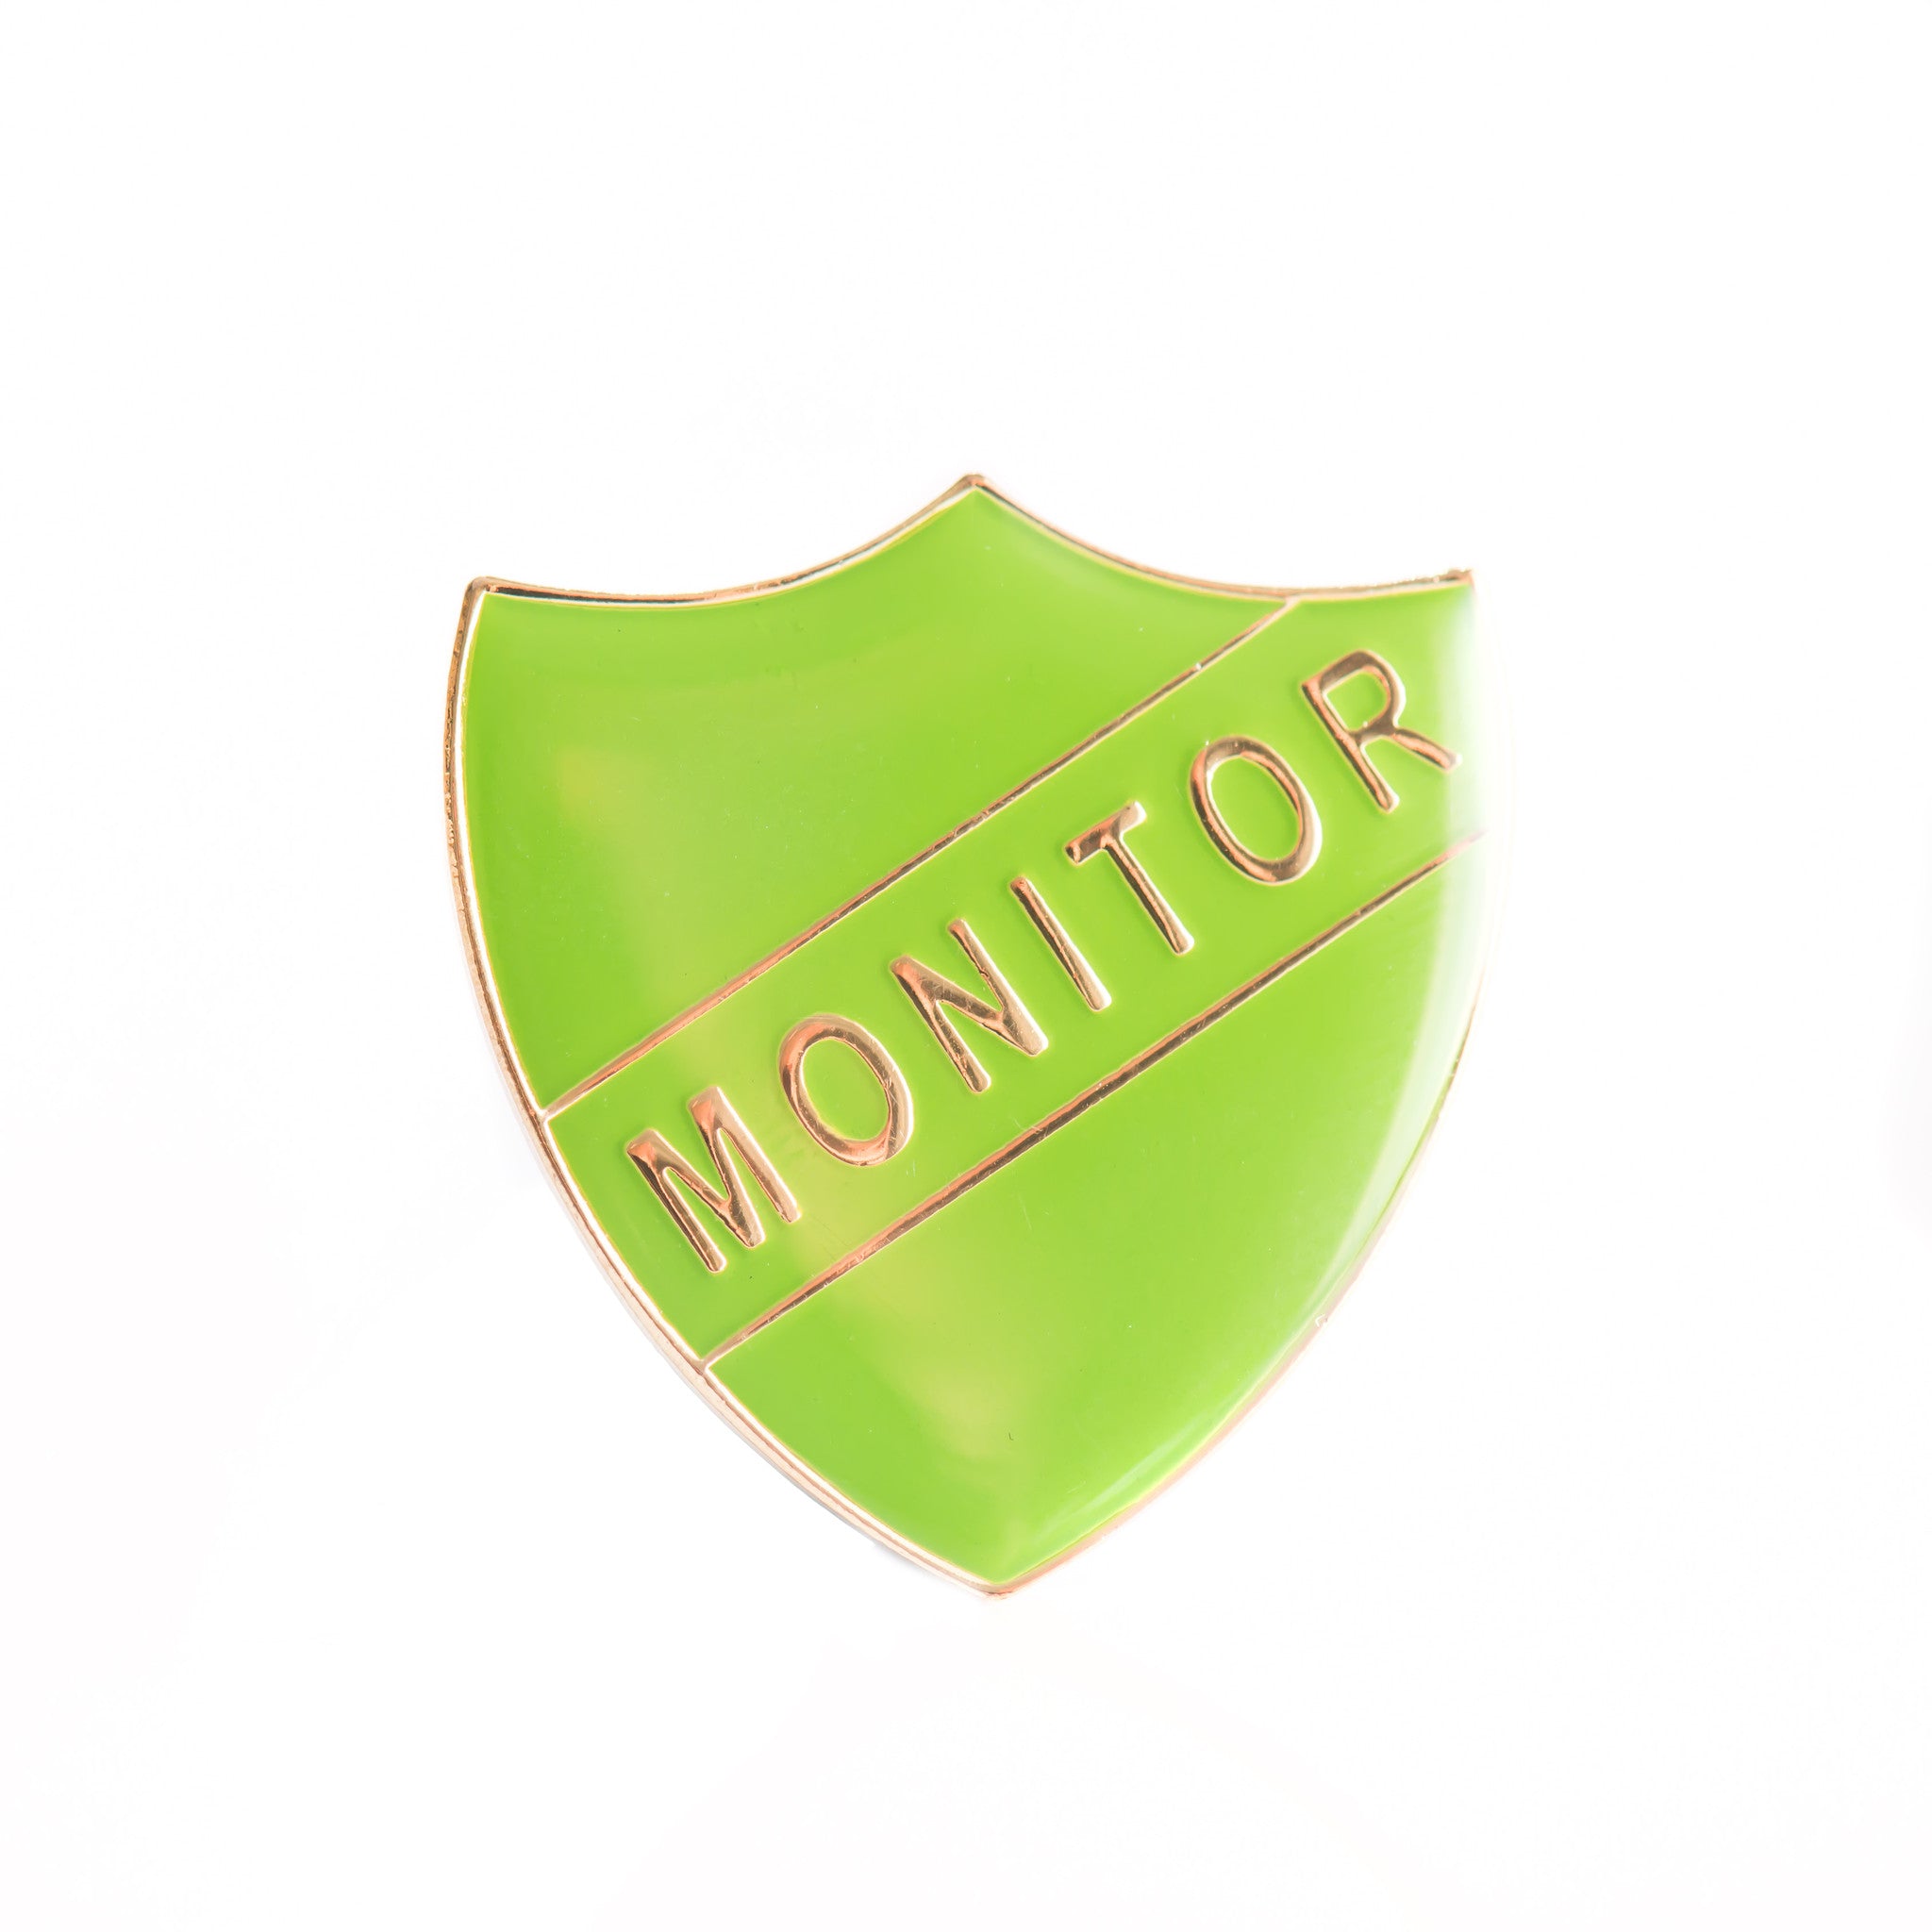 Enamel Shield Pin Badge - Monitor